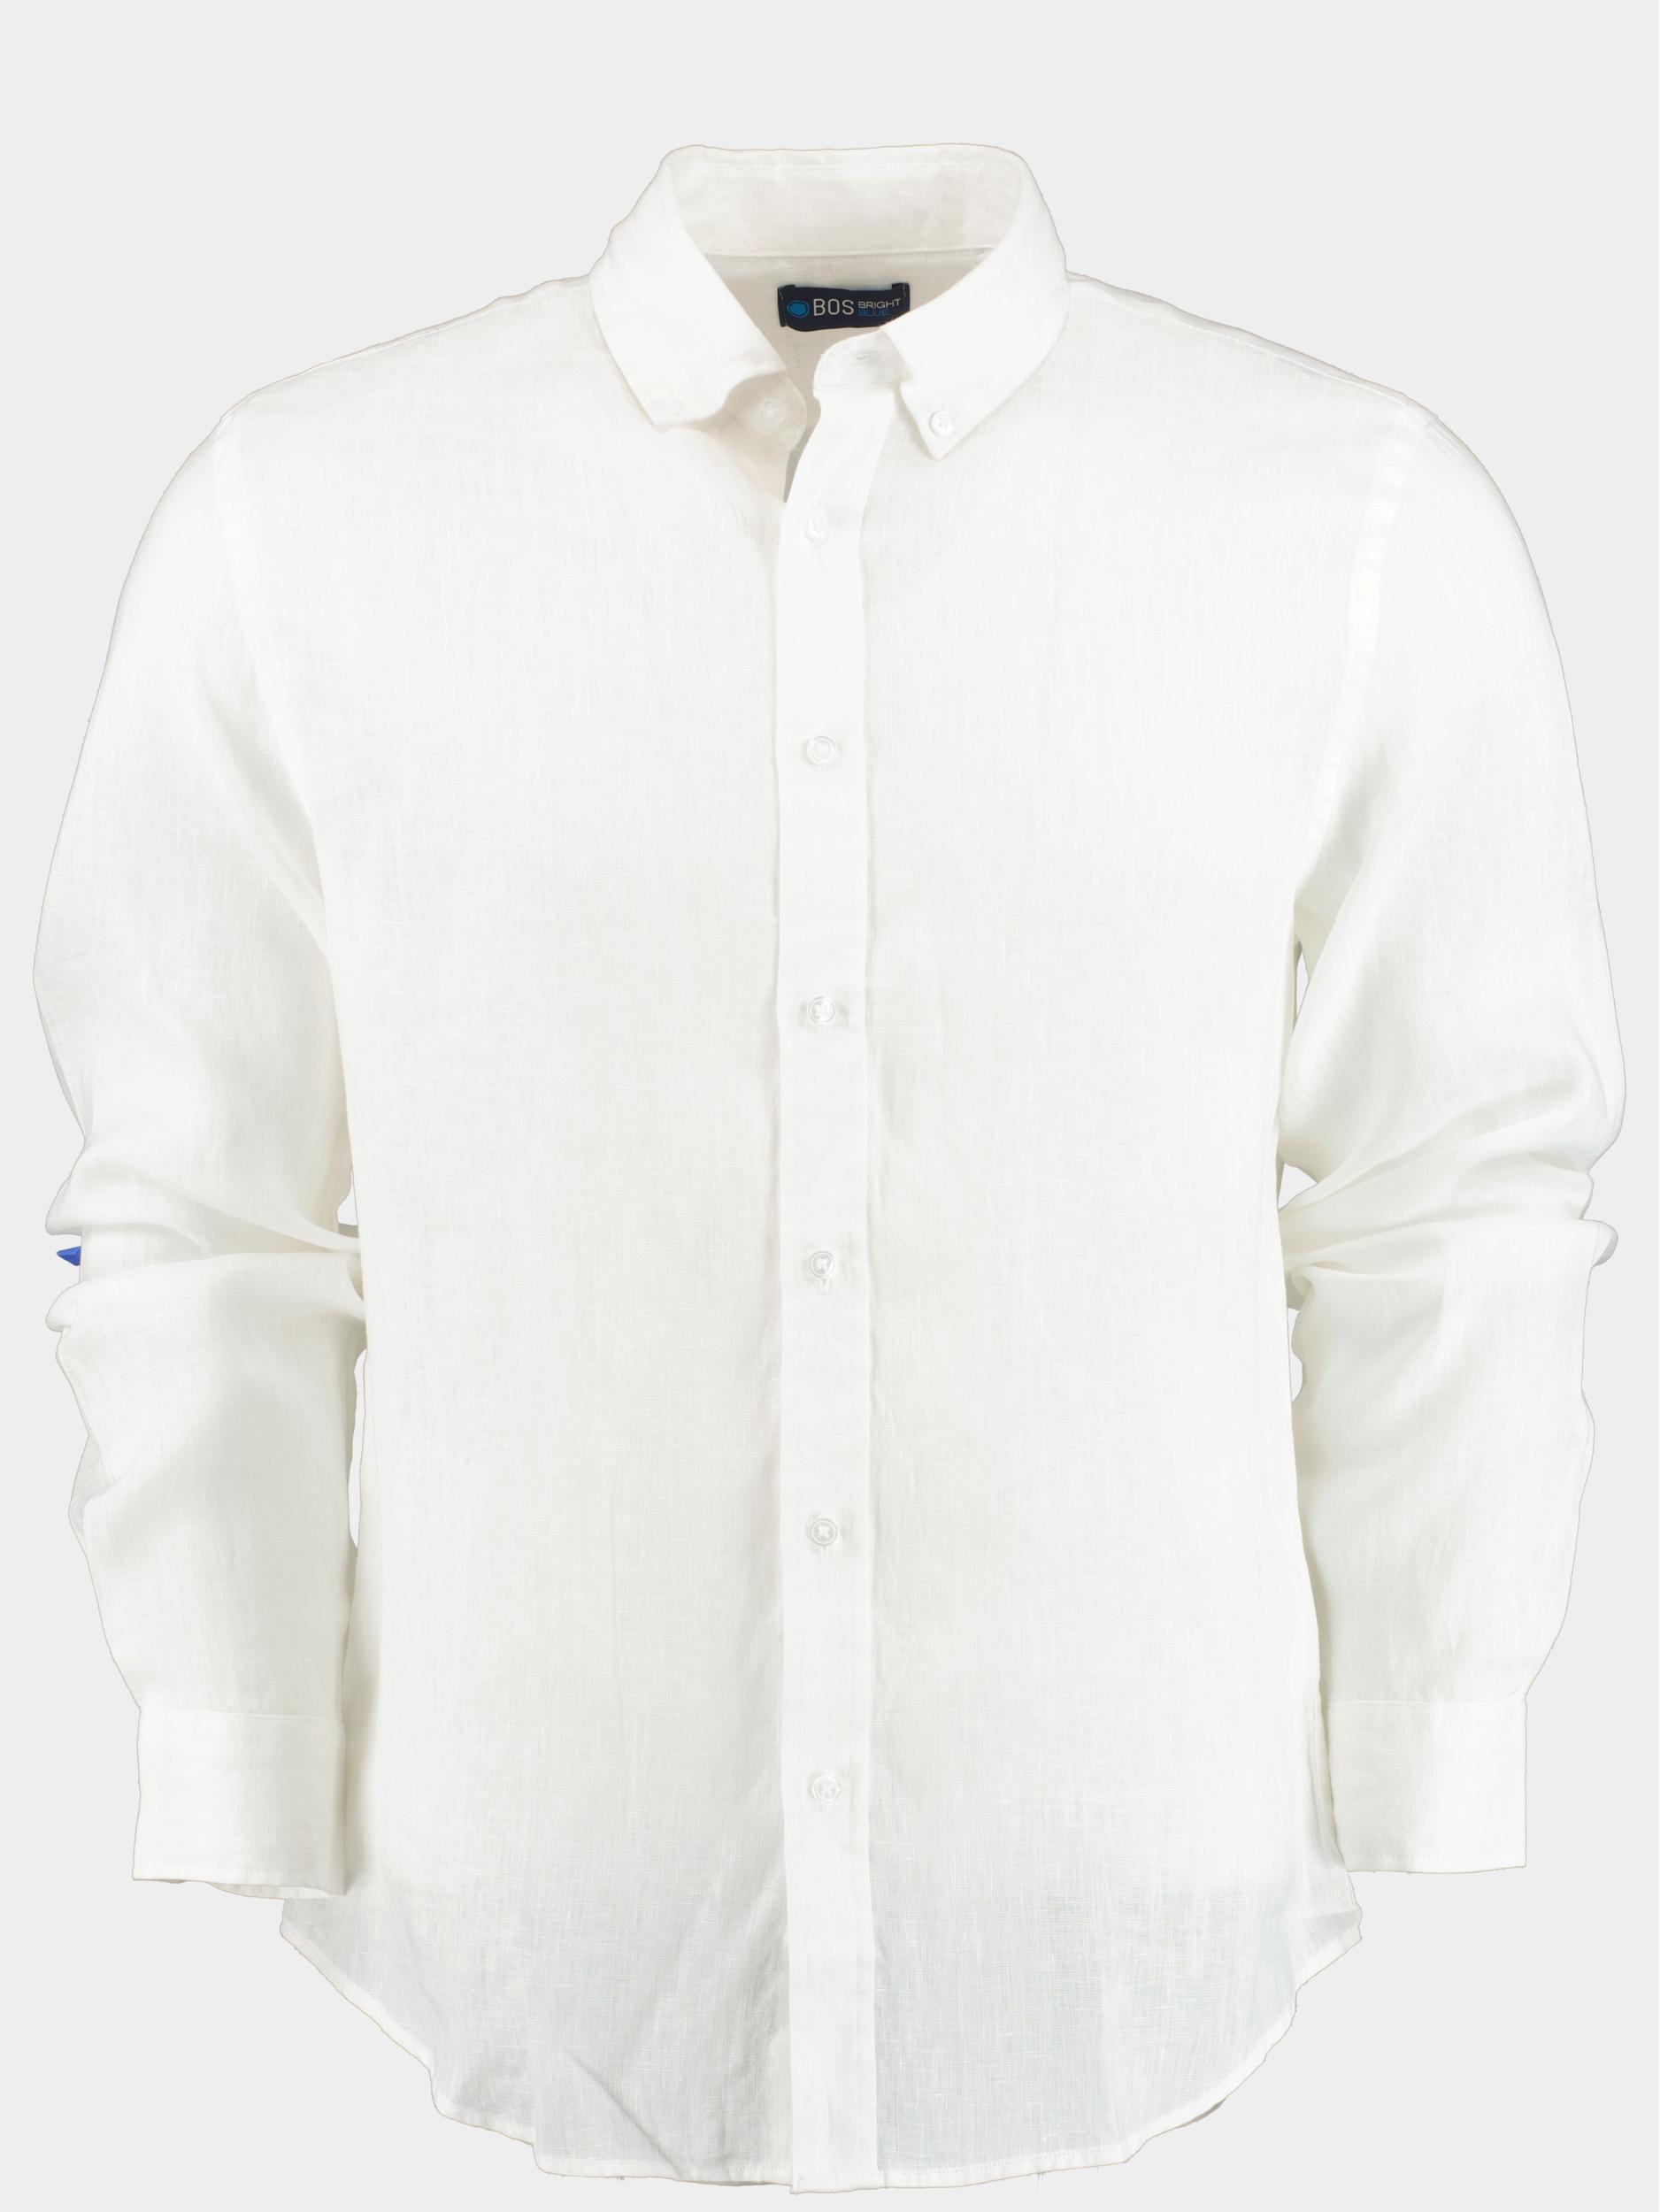 Bos Bright Blue Casual hemd lange mouw Wit Linnen shirt slim fit 9435900/100